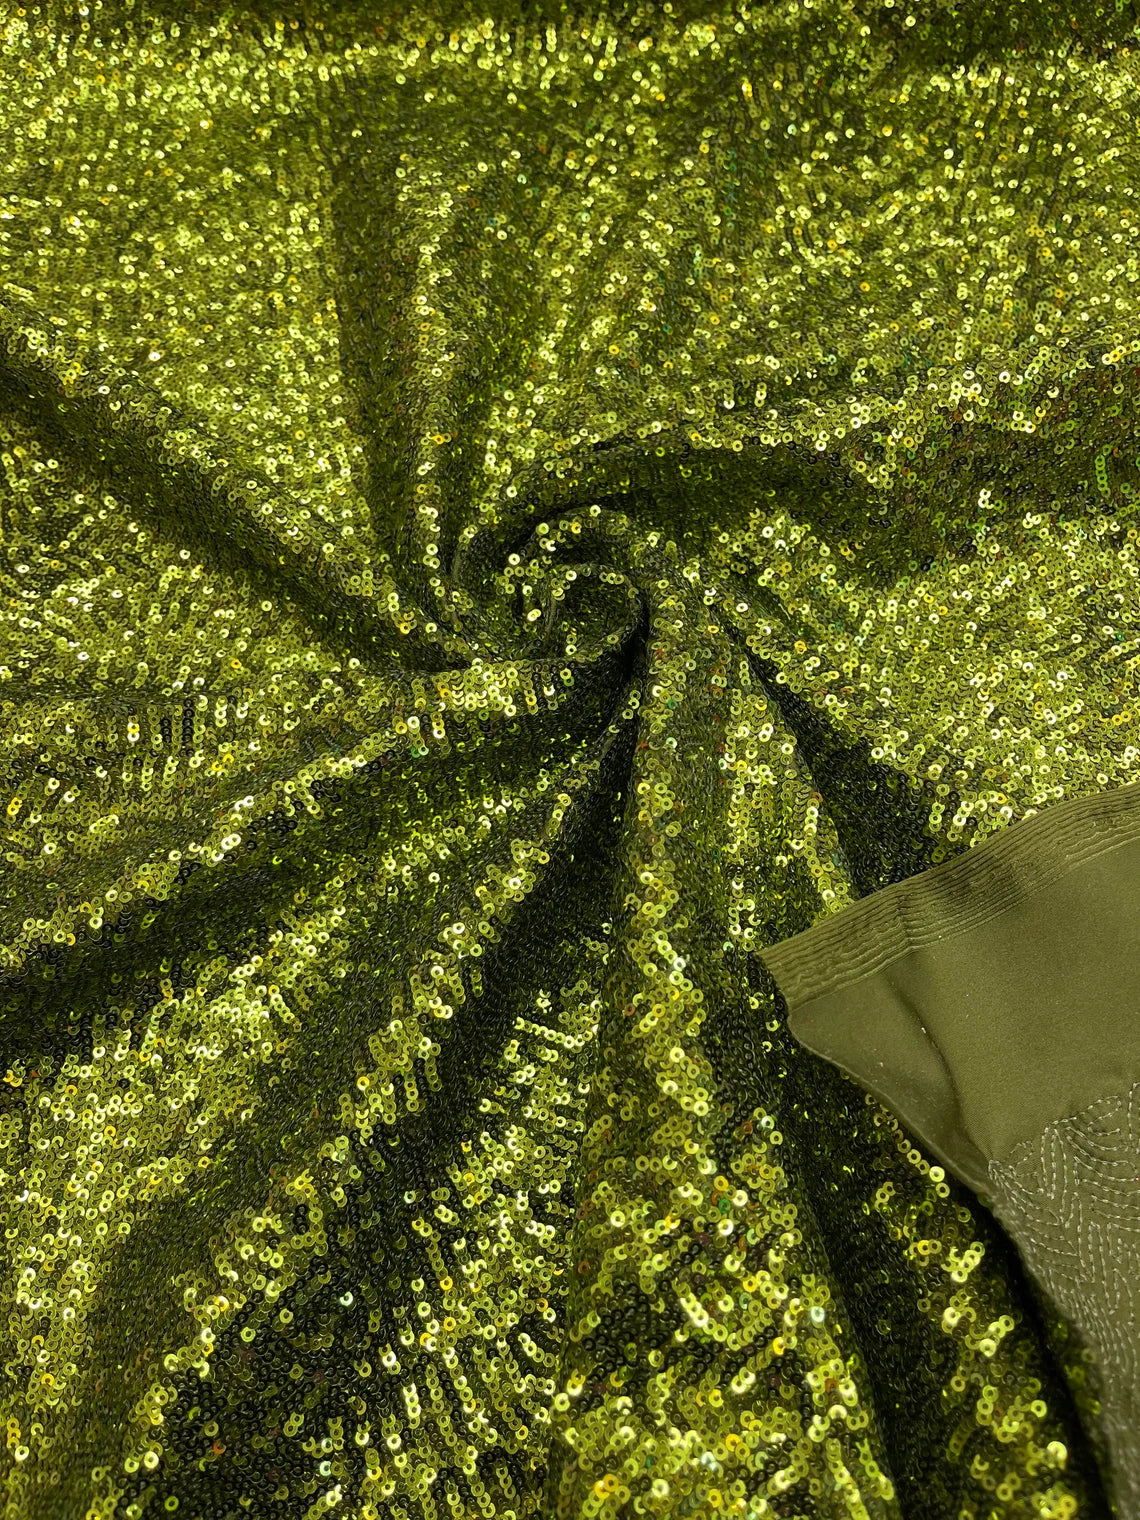 Mini Glitz Sequins on Milliskin - Olive Green - 4 Way Stretch Milliskin Stretch Spandex Fabric by Yard